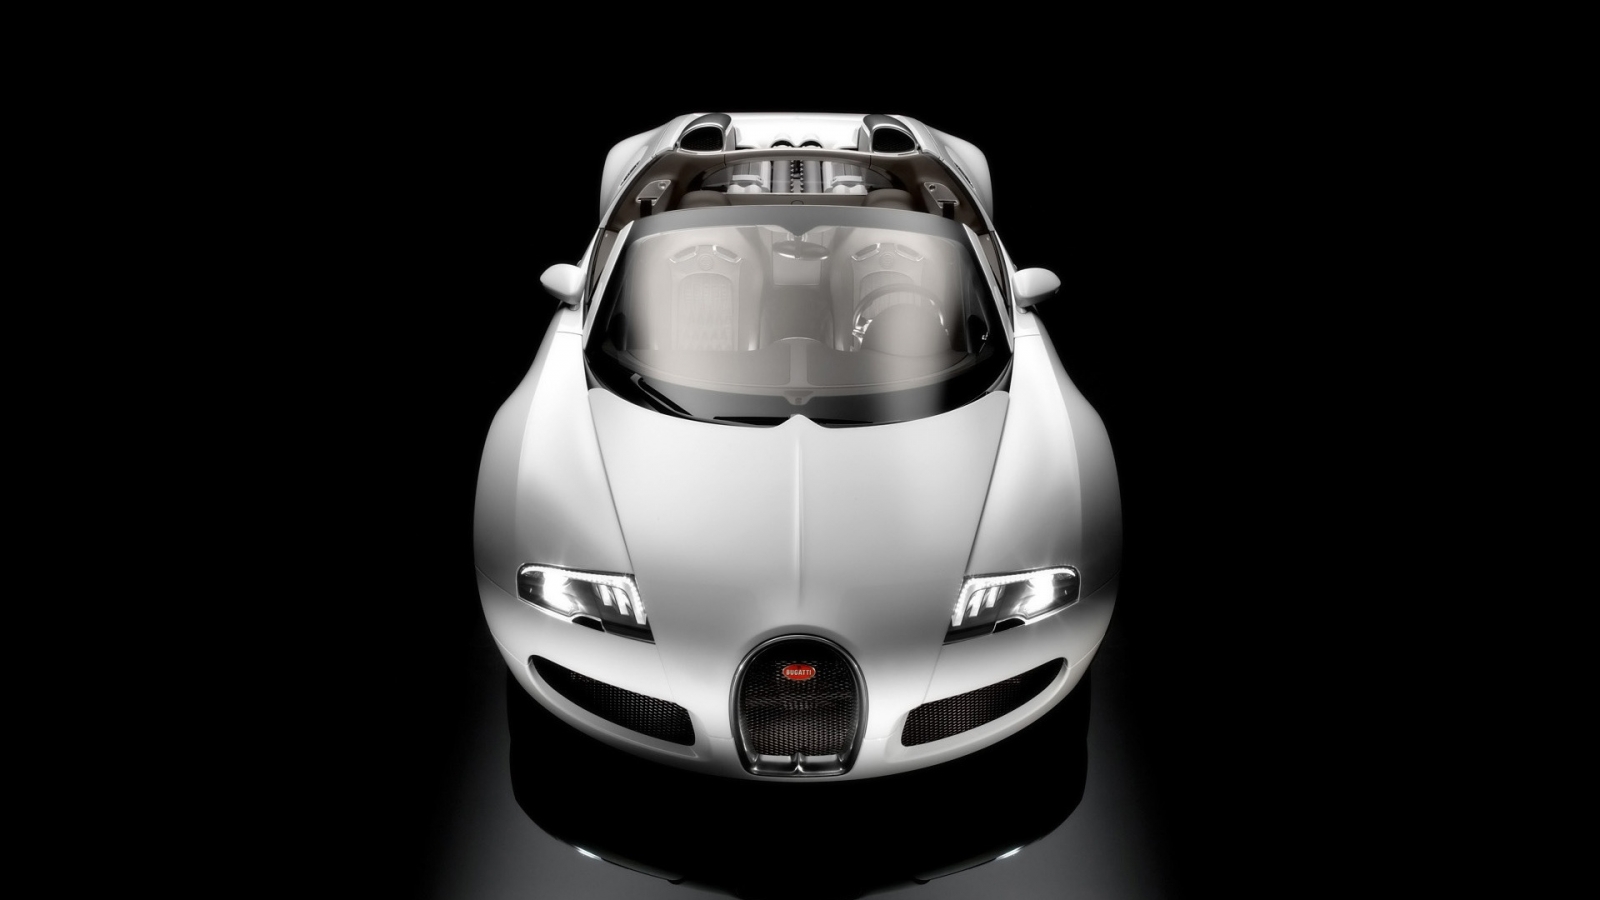 Bugatti Veyron 16.4 Grand Sport Production Version 2009 - Studio Front Top for 1600 x 900 HDTV resolution